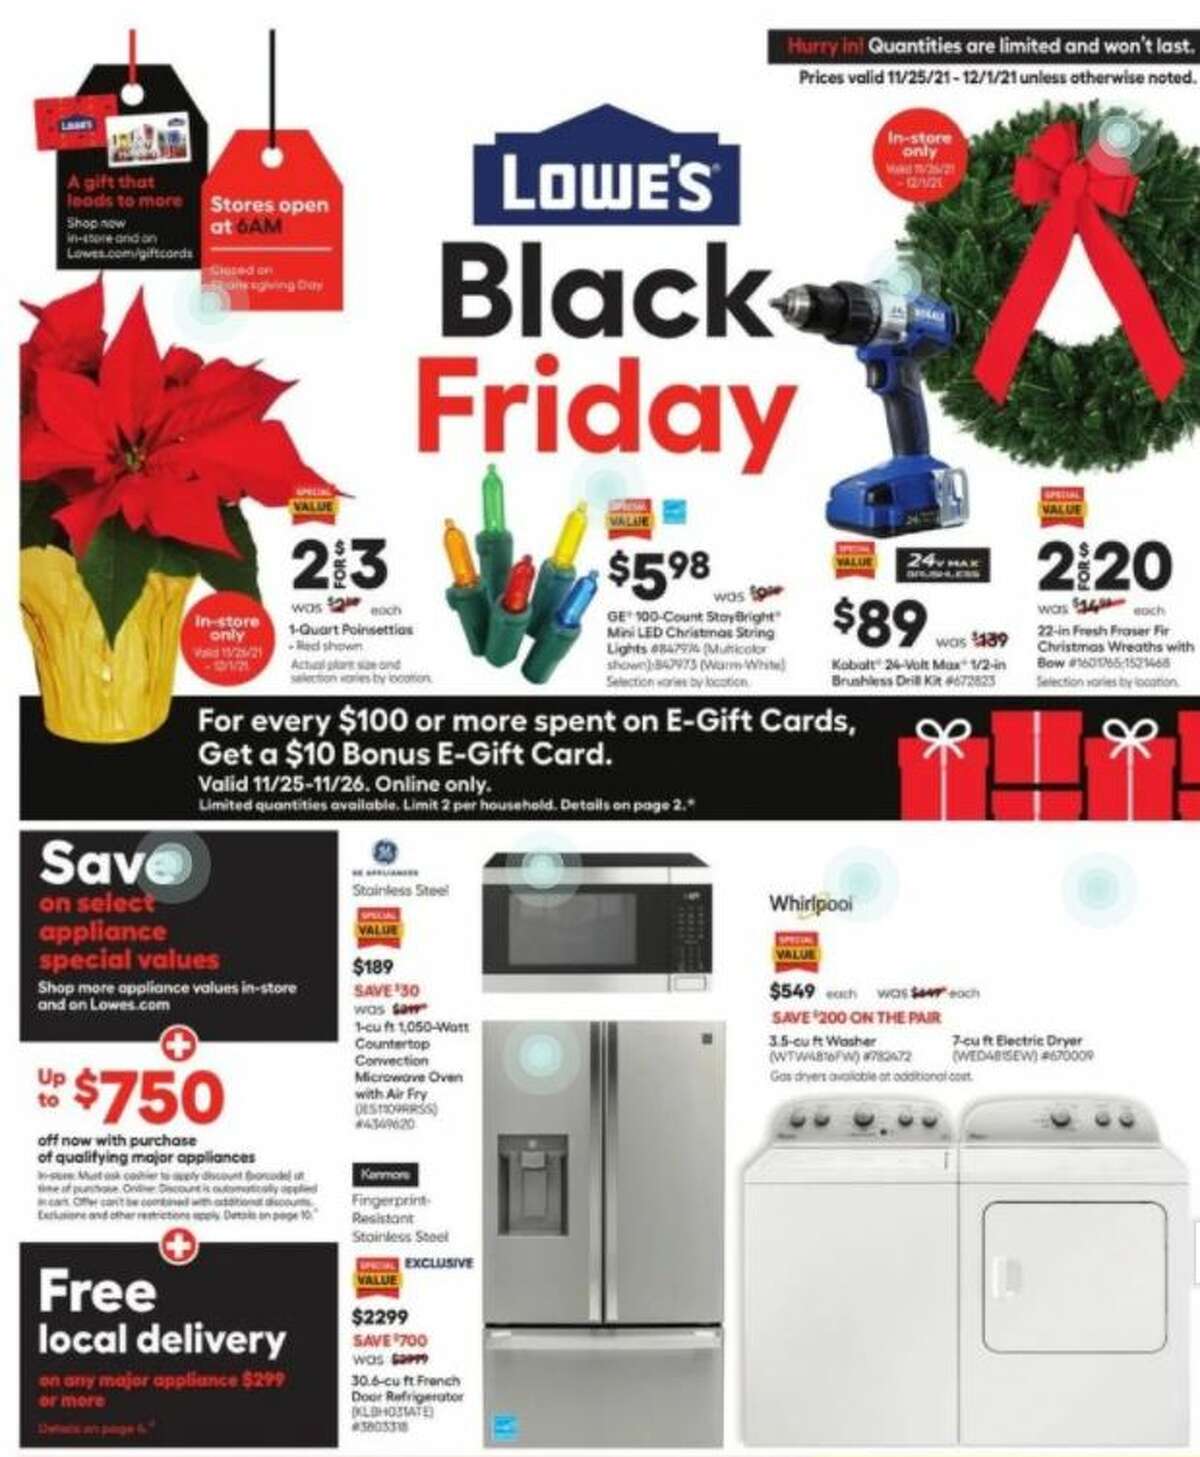 Lowe's Home Improvement Black Friday ad. 